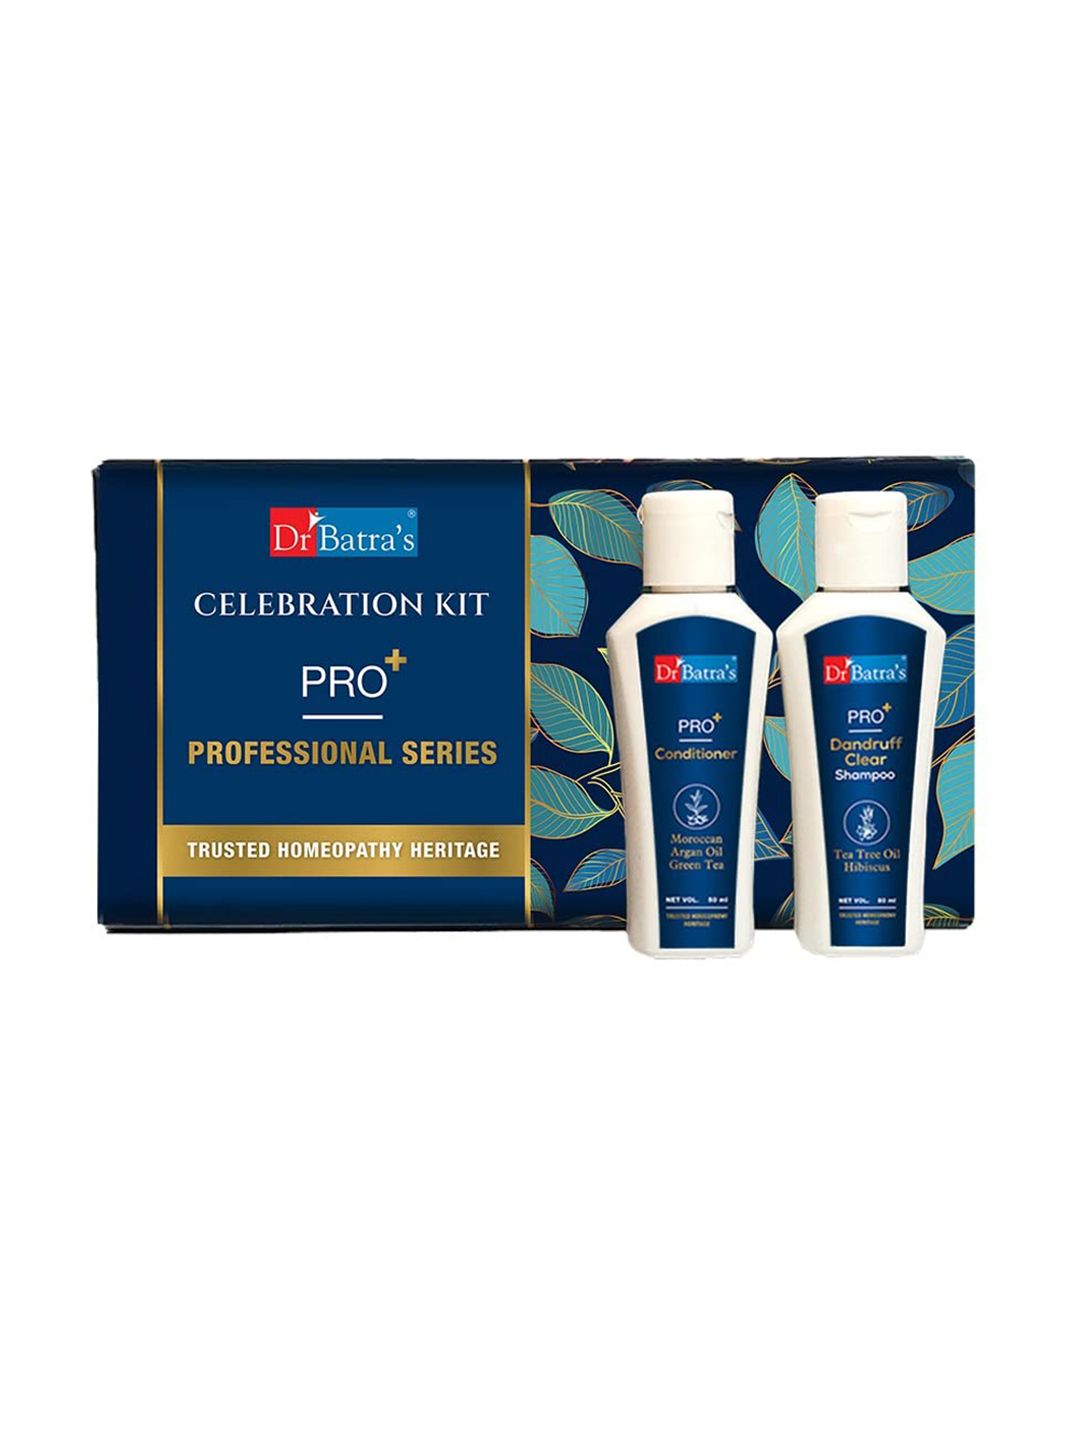 Dr. Batras Pro+ Professional Series Shampoo & Conditioner Celebration Kit 100 ml Price in India